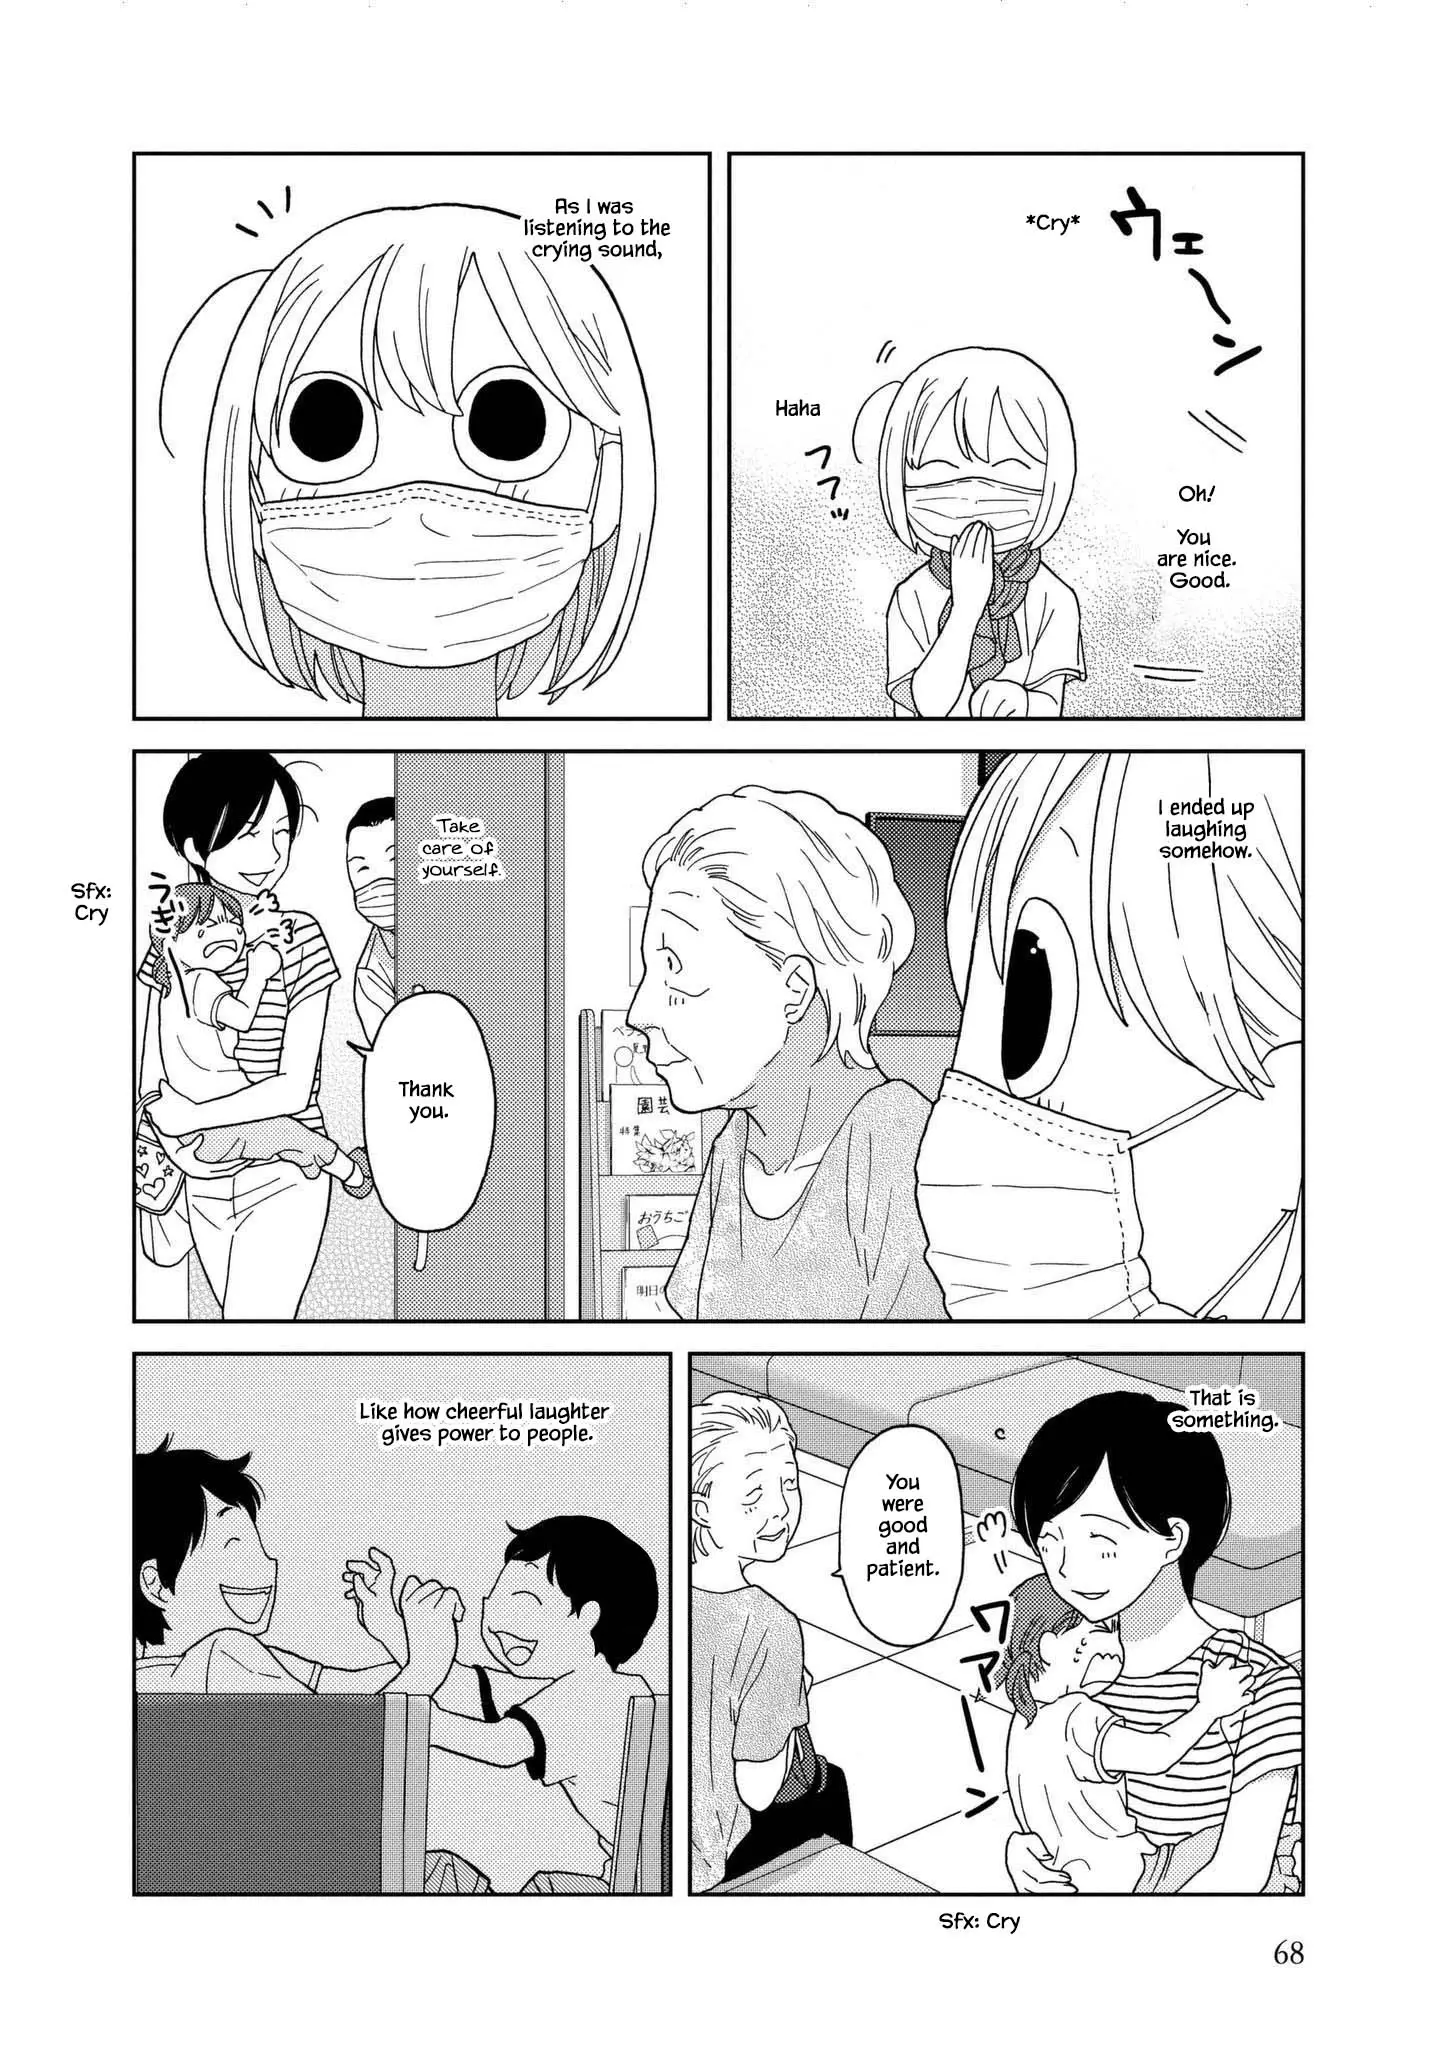 Takako-San - 46 page 6-33fa0e77